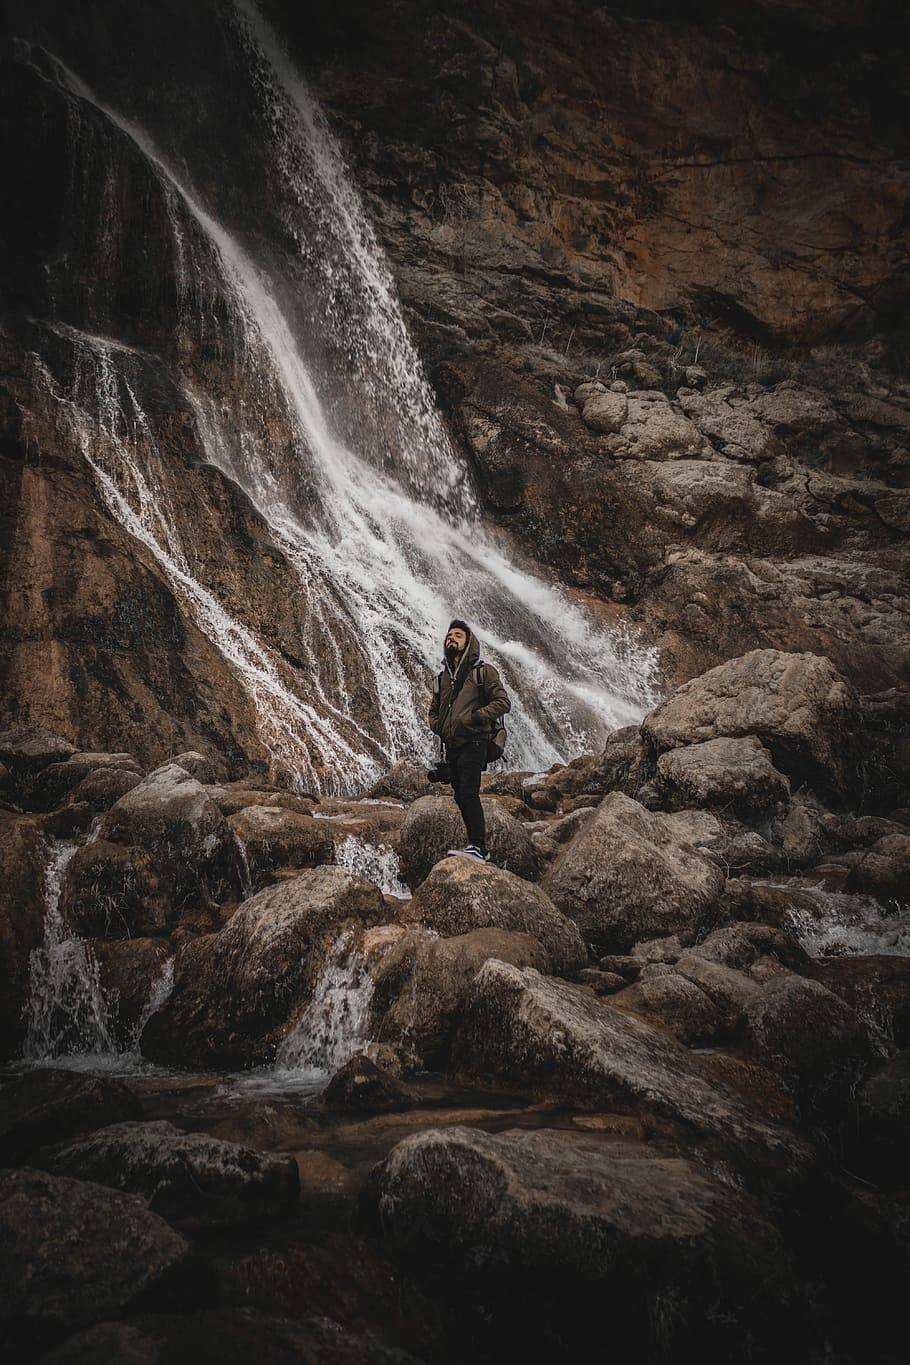 HD wallpaper: man standing near waterfall, photo of man wearing brown ...